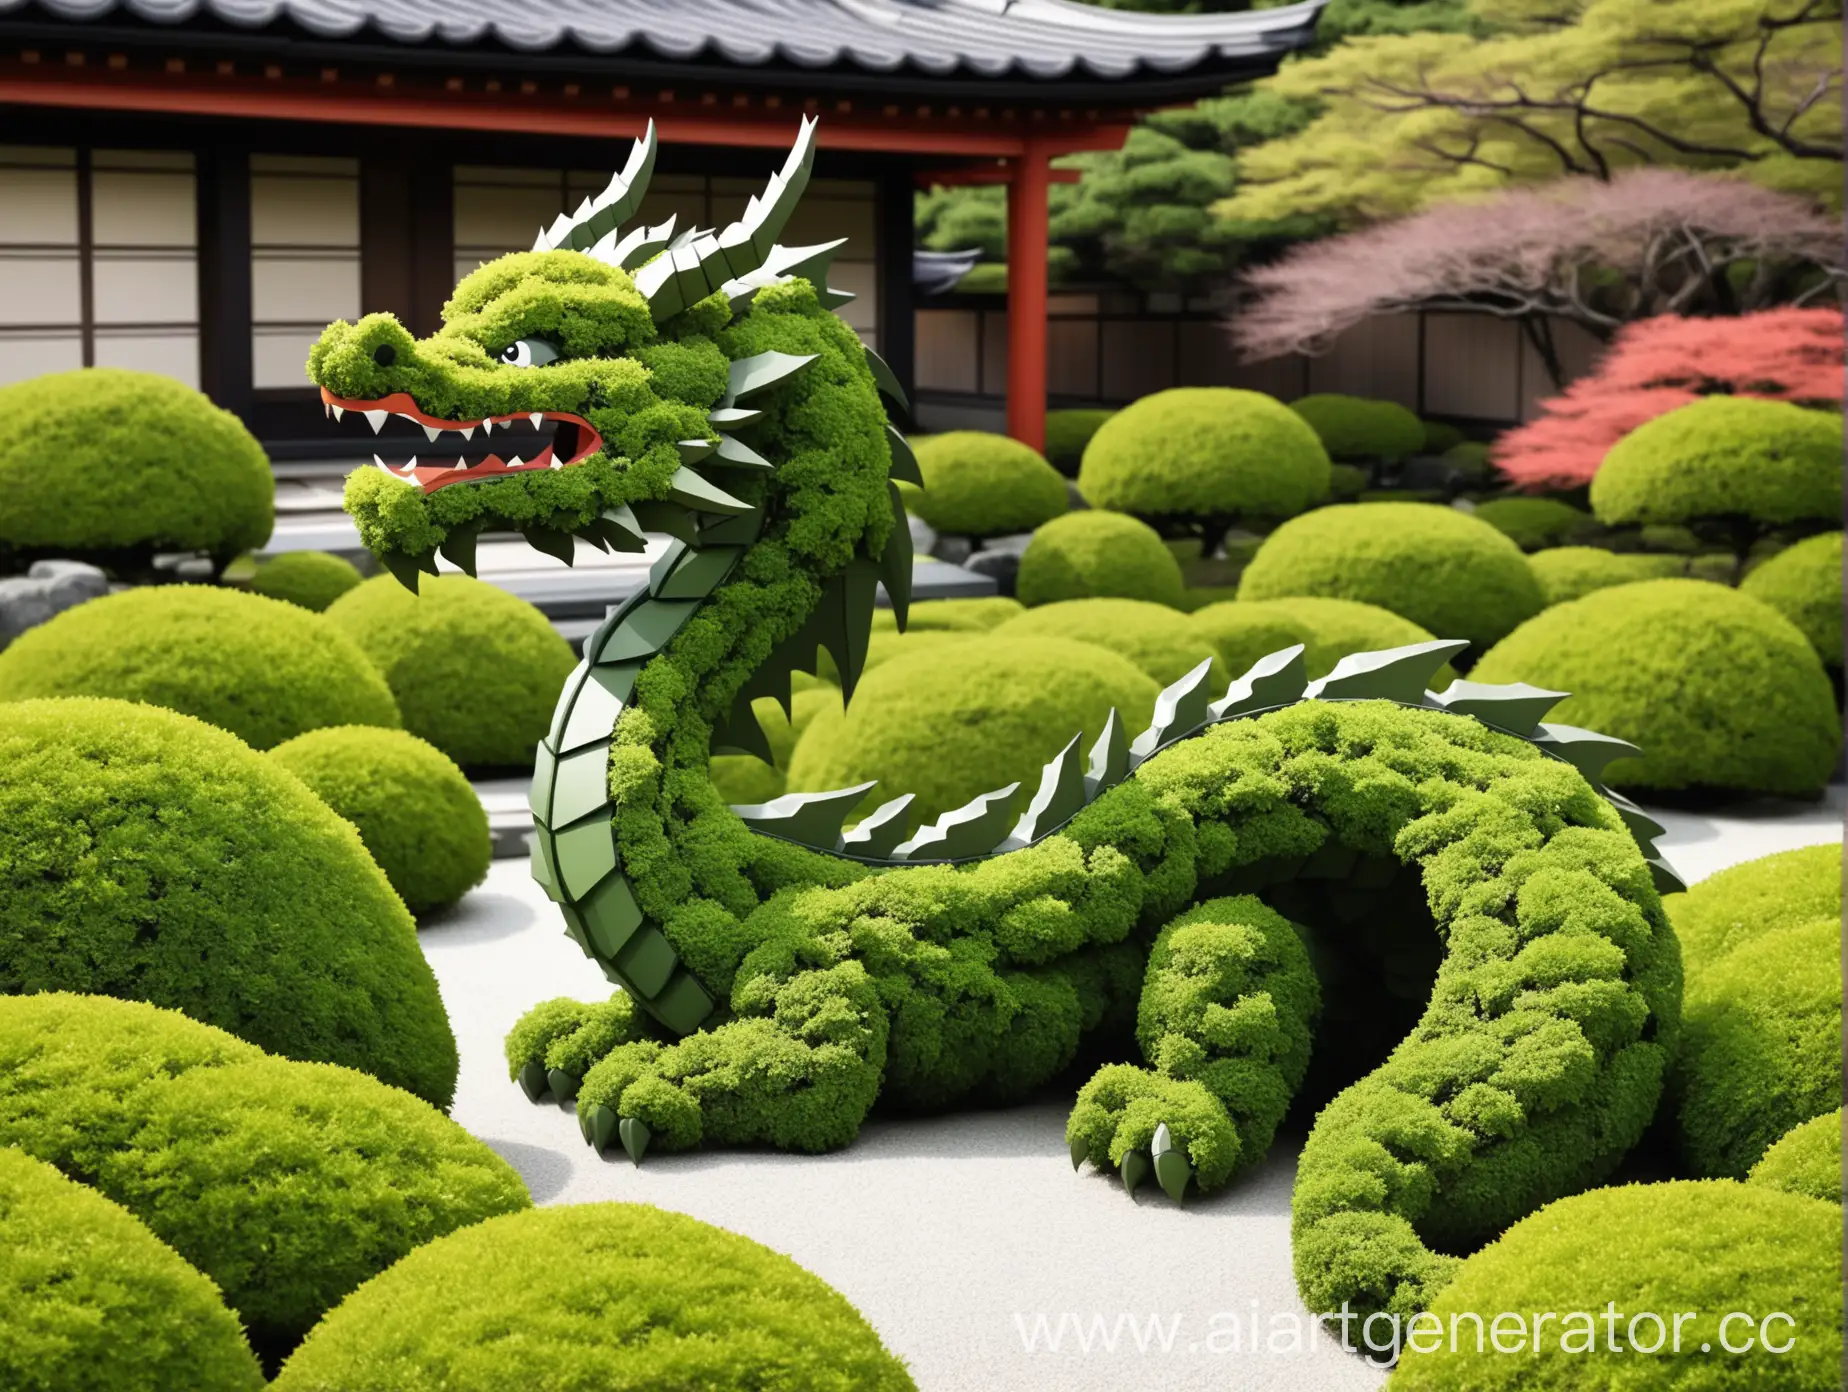 Minimalistic-Cartoon-Dragon-Bush-Sculpture-for-Japanese-Garden